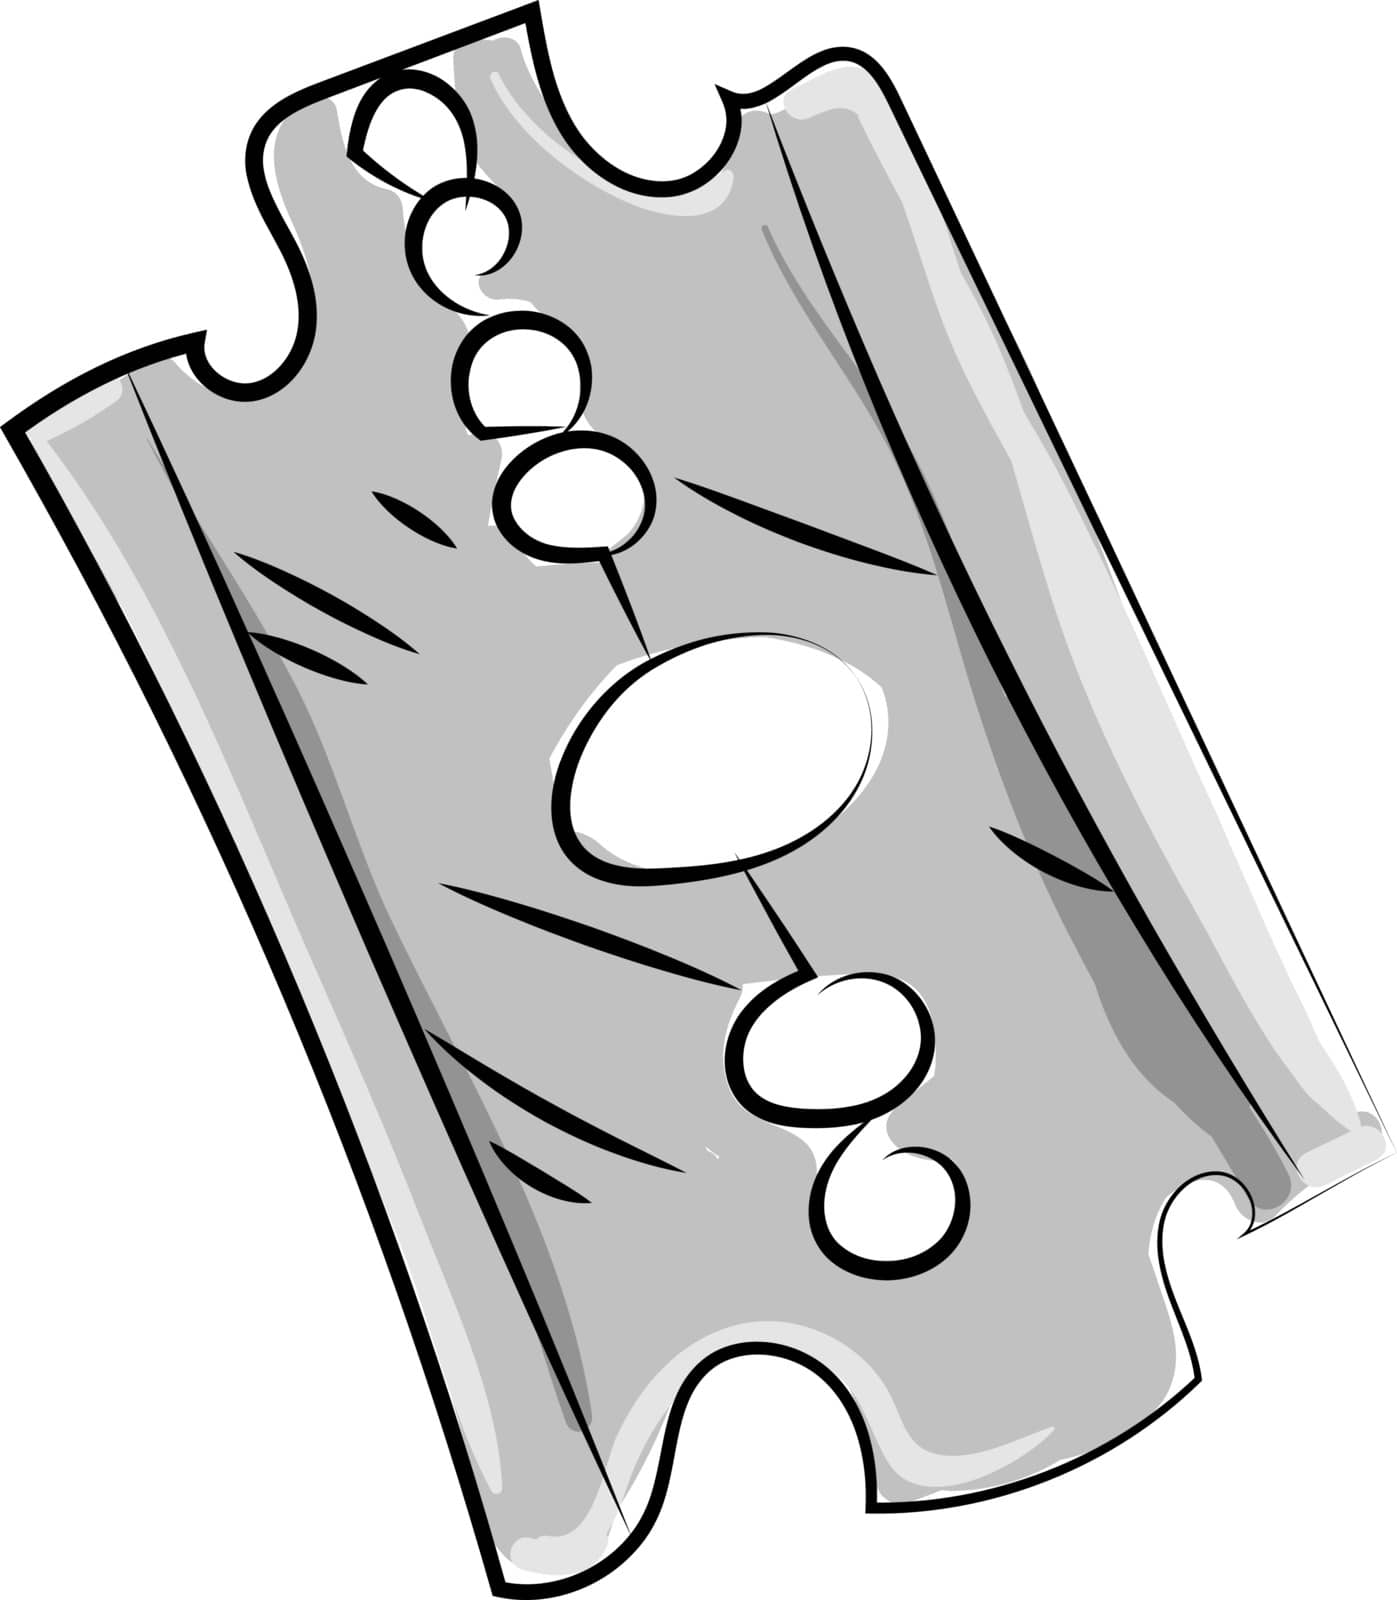 Sharp razor, illustration, vector on white background.